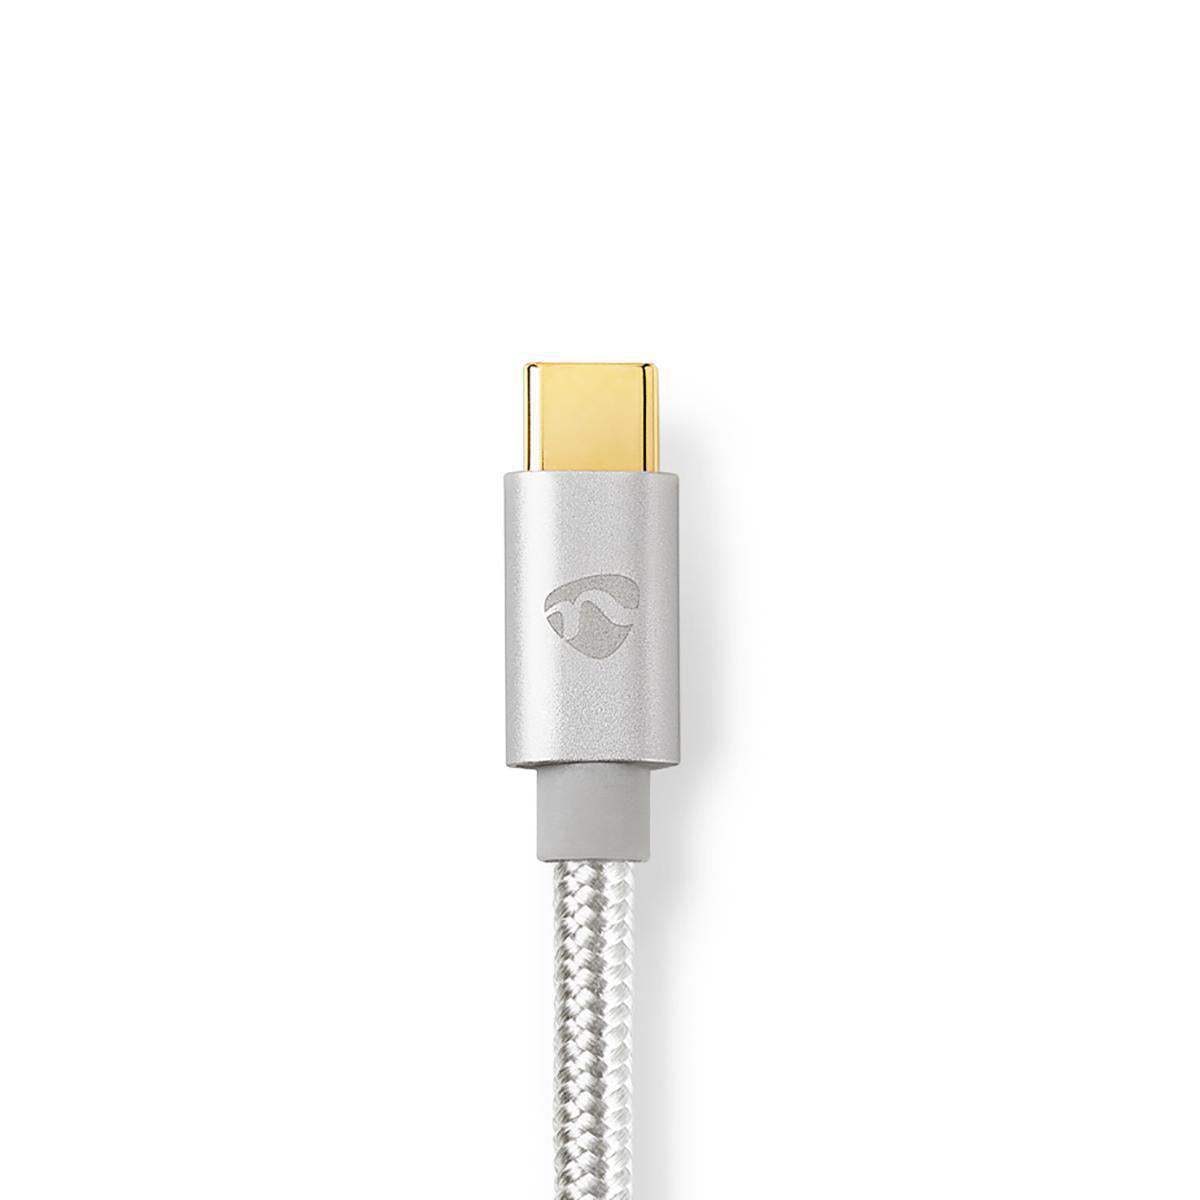 Lightning Kabel | USB 2.0 | Apple Lightning 8-Pin | USB-C™ Stecker | 480 Mbps | Vergoldet | 2.00 m | Rund | Geflochten / Nylon | Aluminium | Verpackung mit Sichtfenster